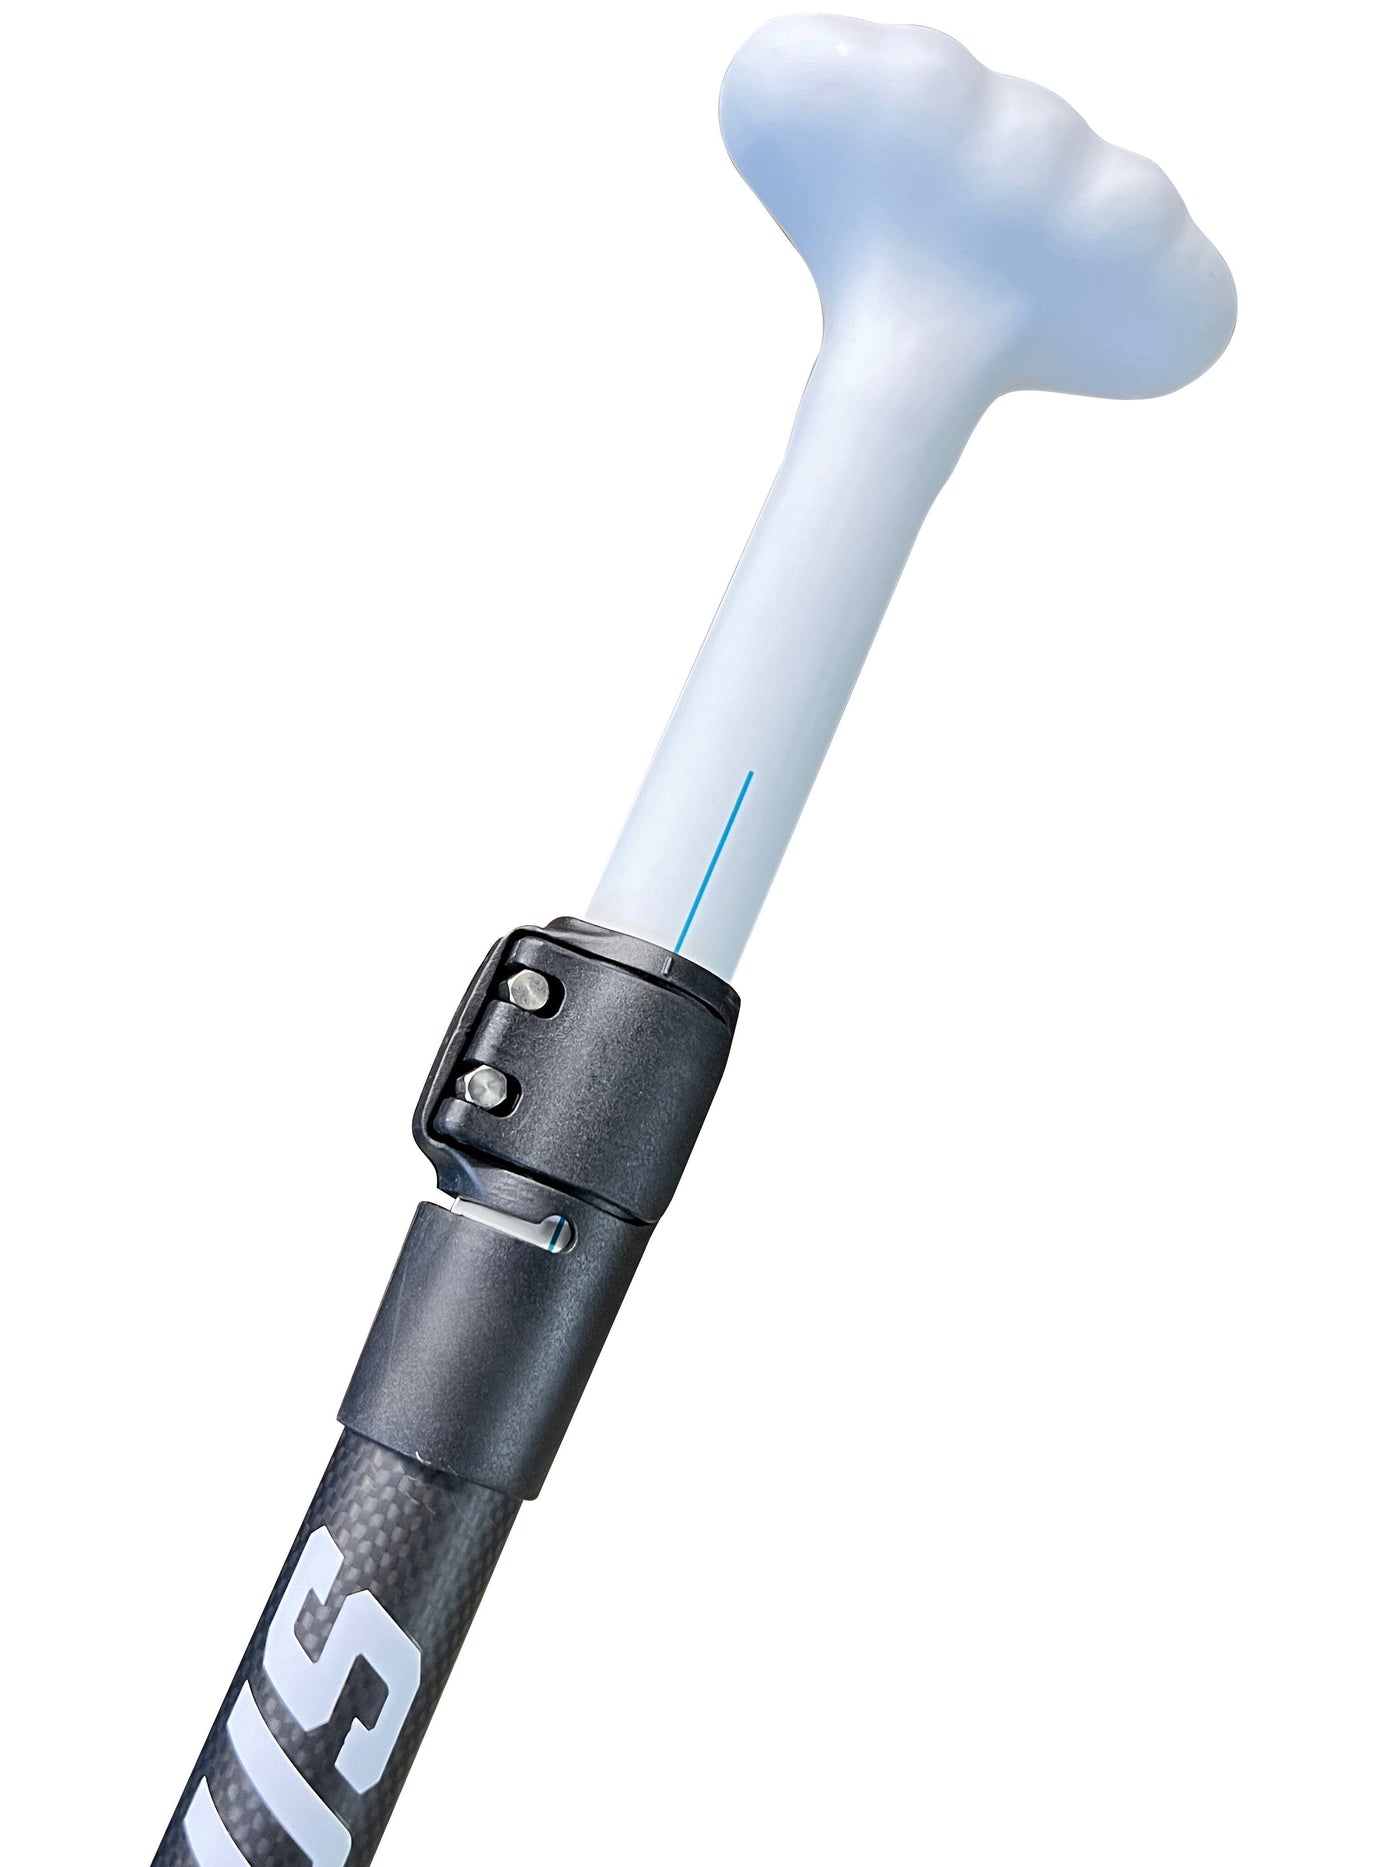 Adjustable Carbon Fiber Paddle - Tough Blade 